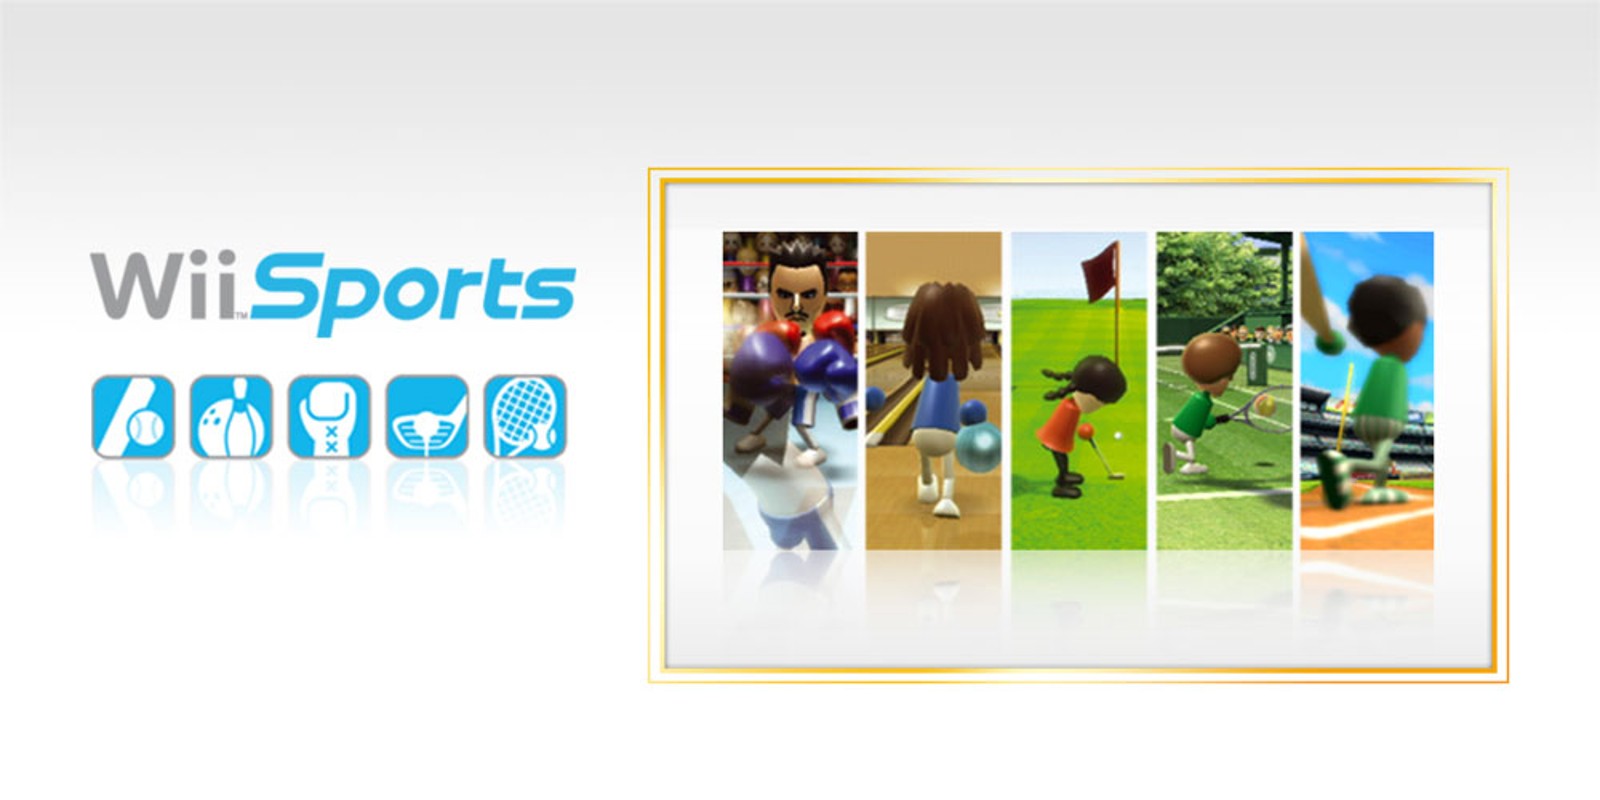 SI Wii WiiSports NintendoSelects image1600w